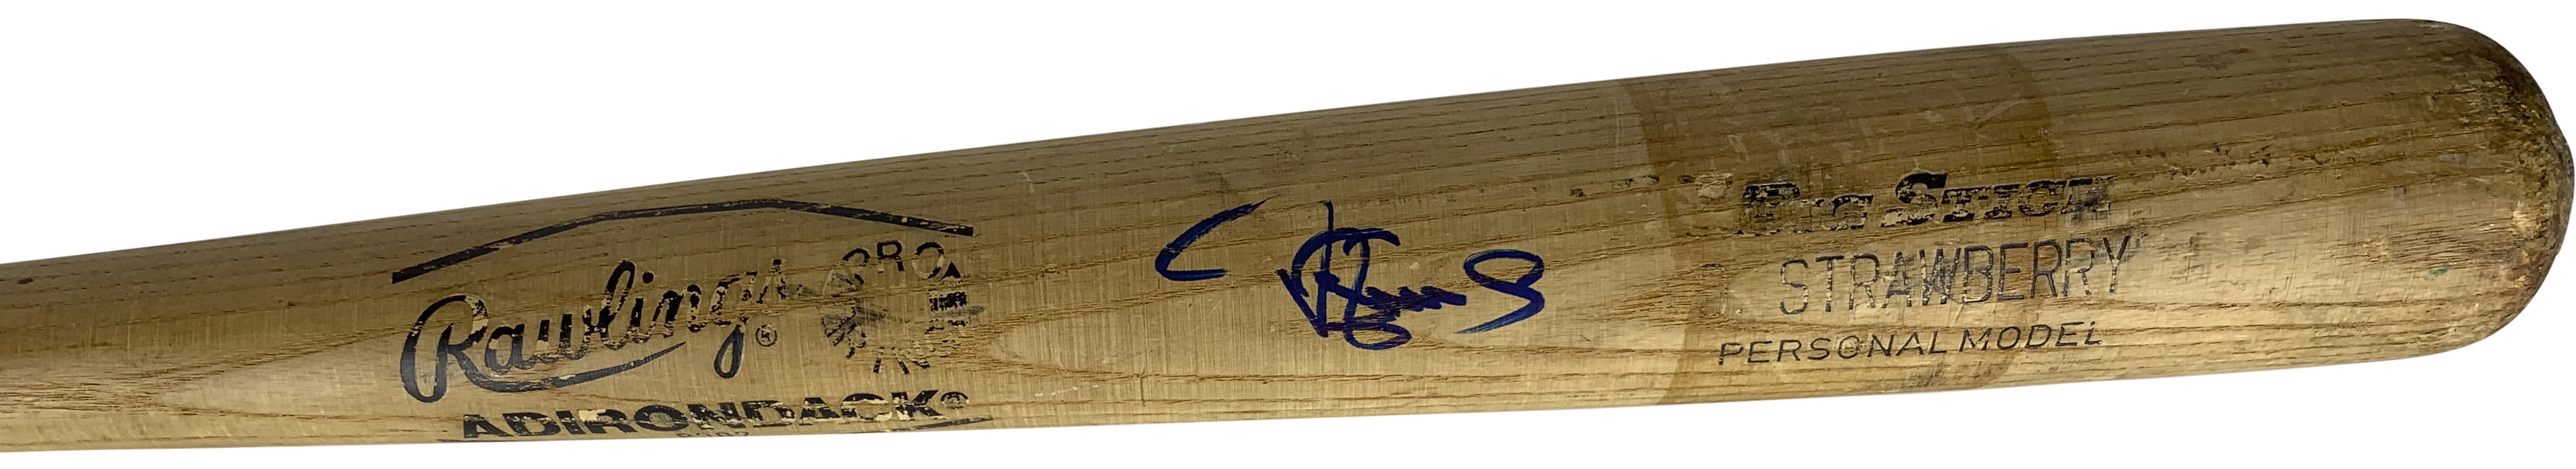 Darryl Strawberry Signed & Game Used 1984 Mets 113A Baseball Bat (PSA/DNA)